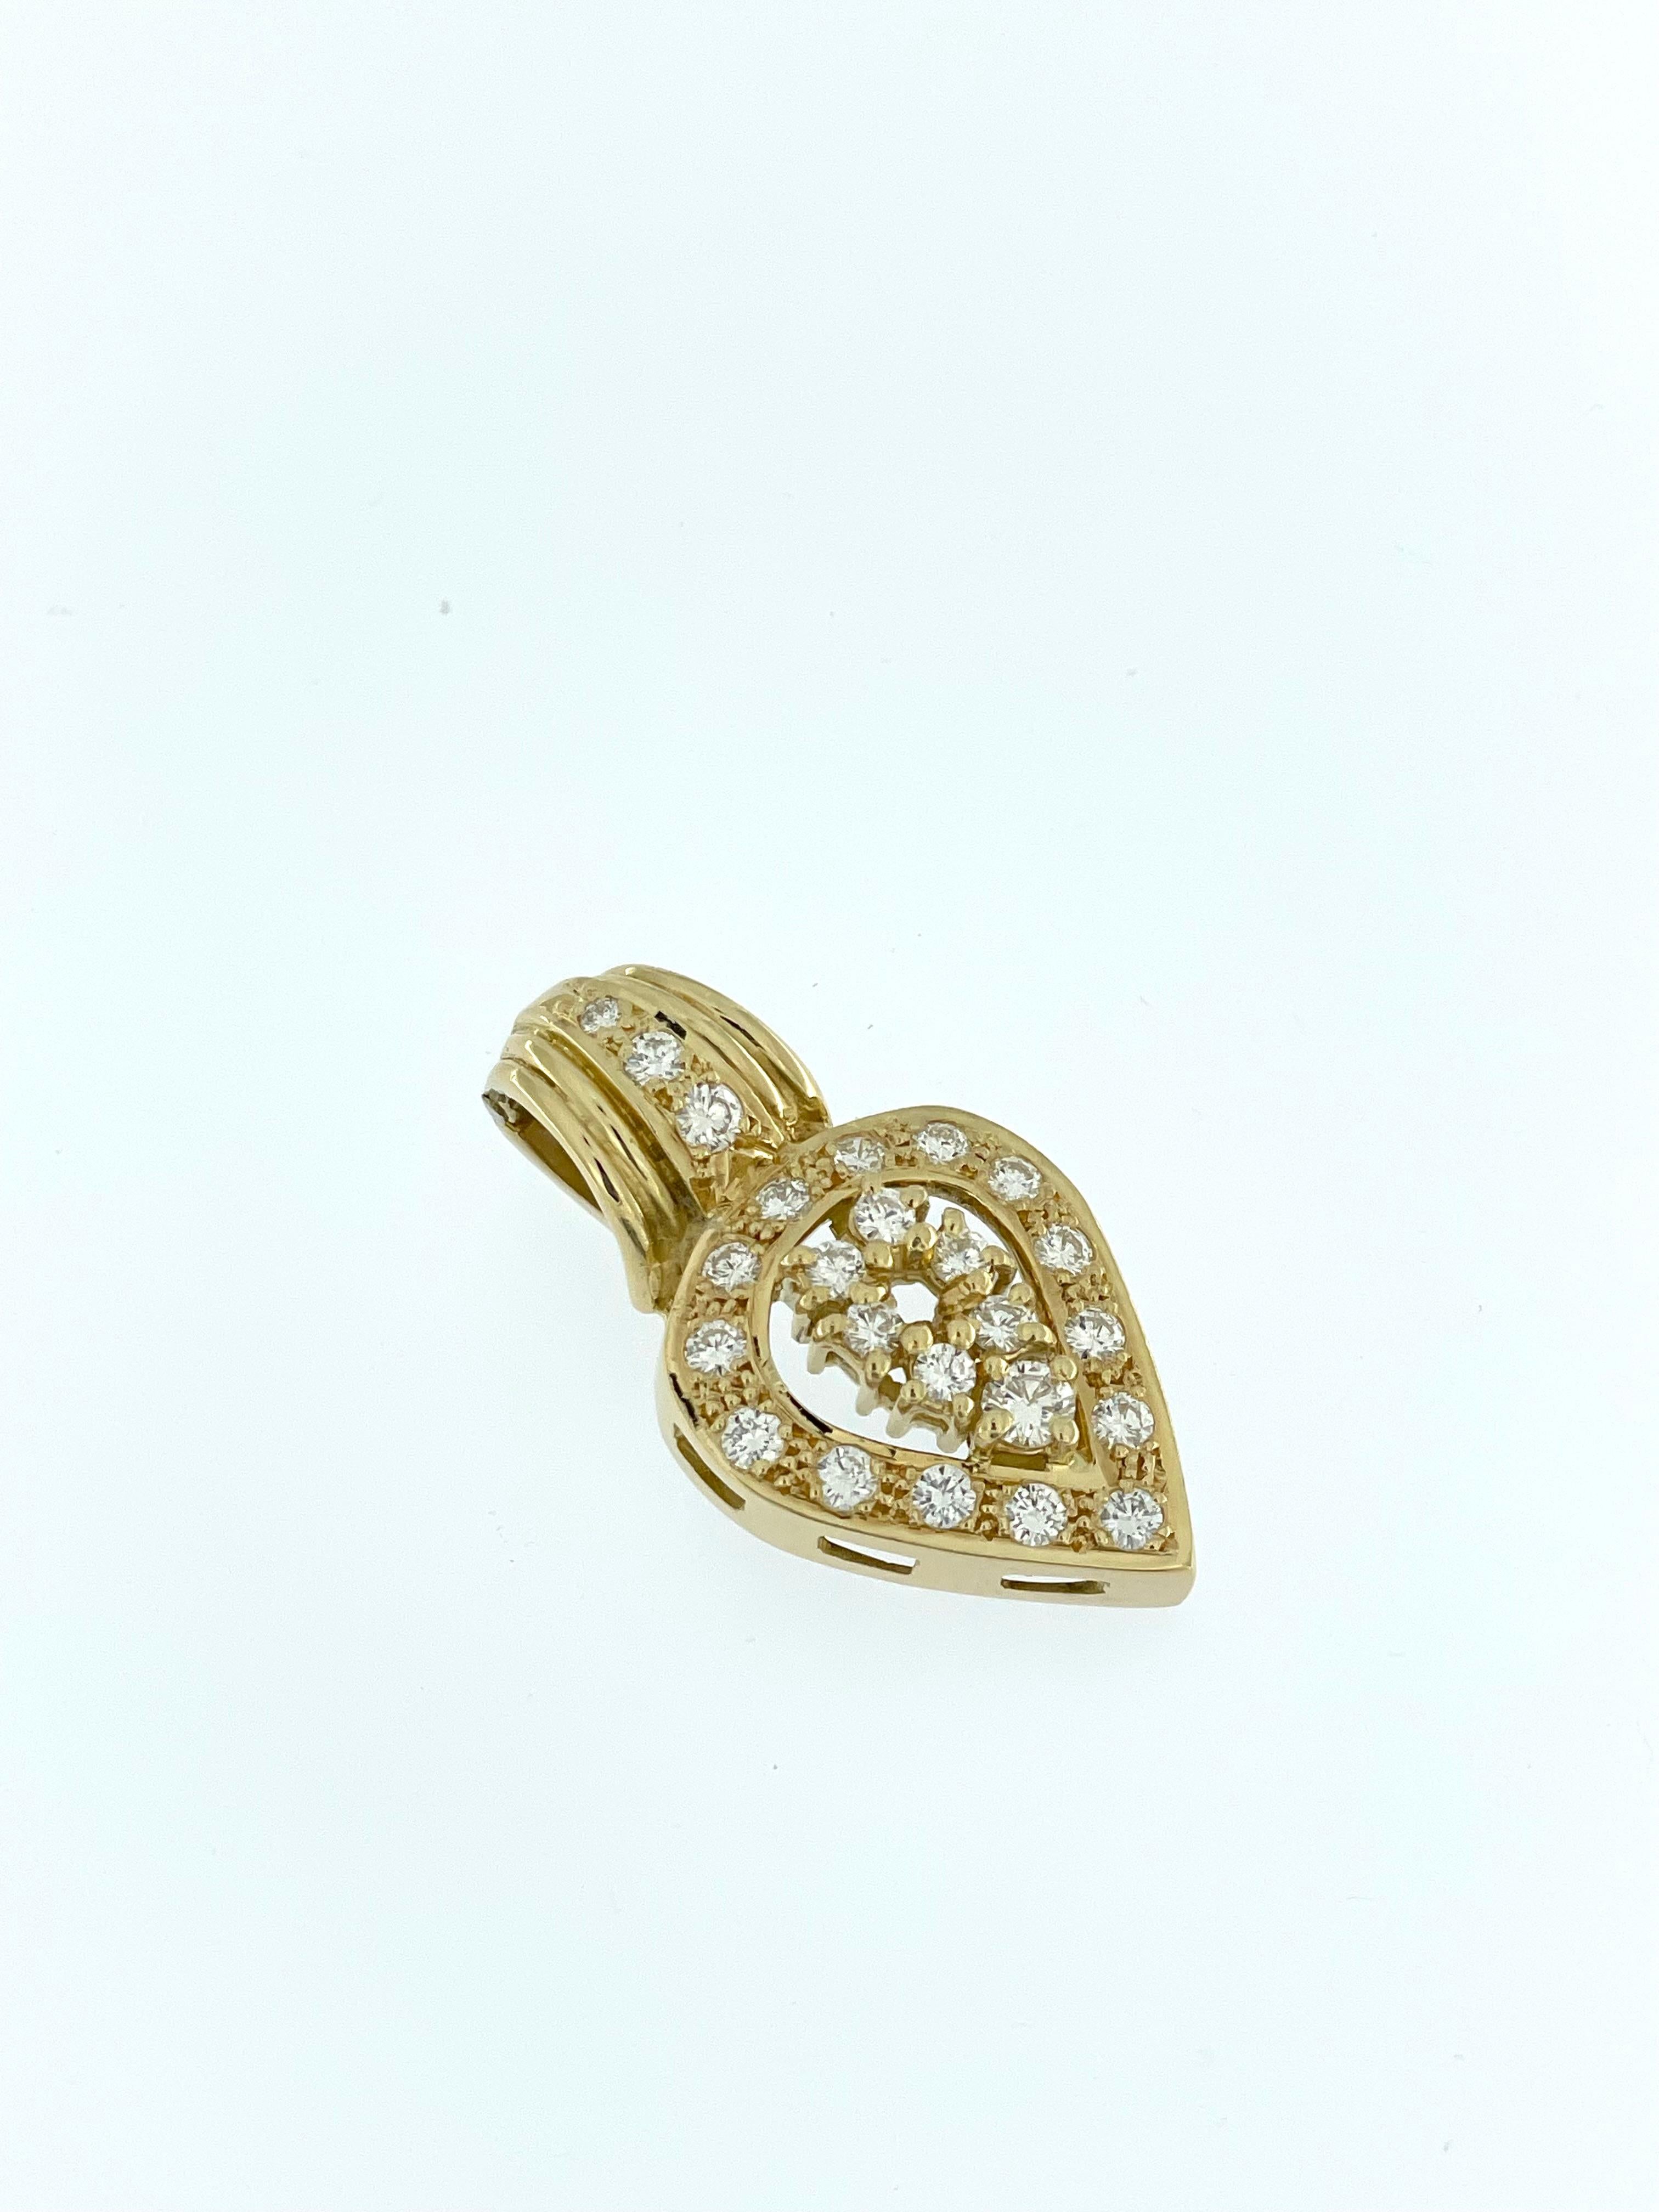 Art Nouveau French 18 karat Yellow Gold Heart Pendant with Diamonds For Sale